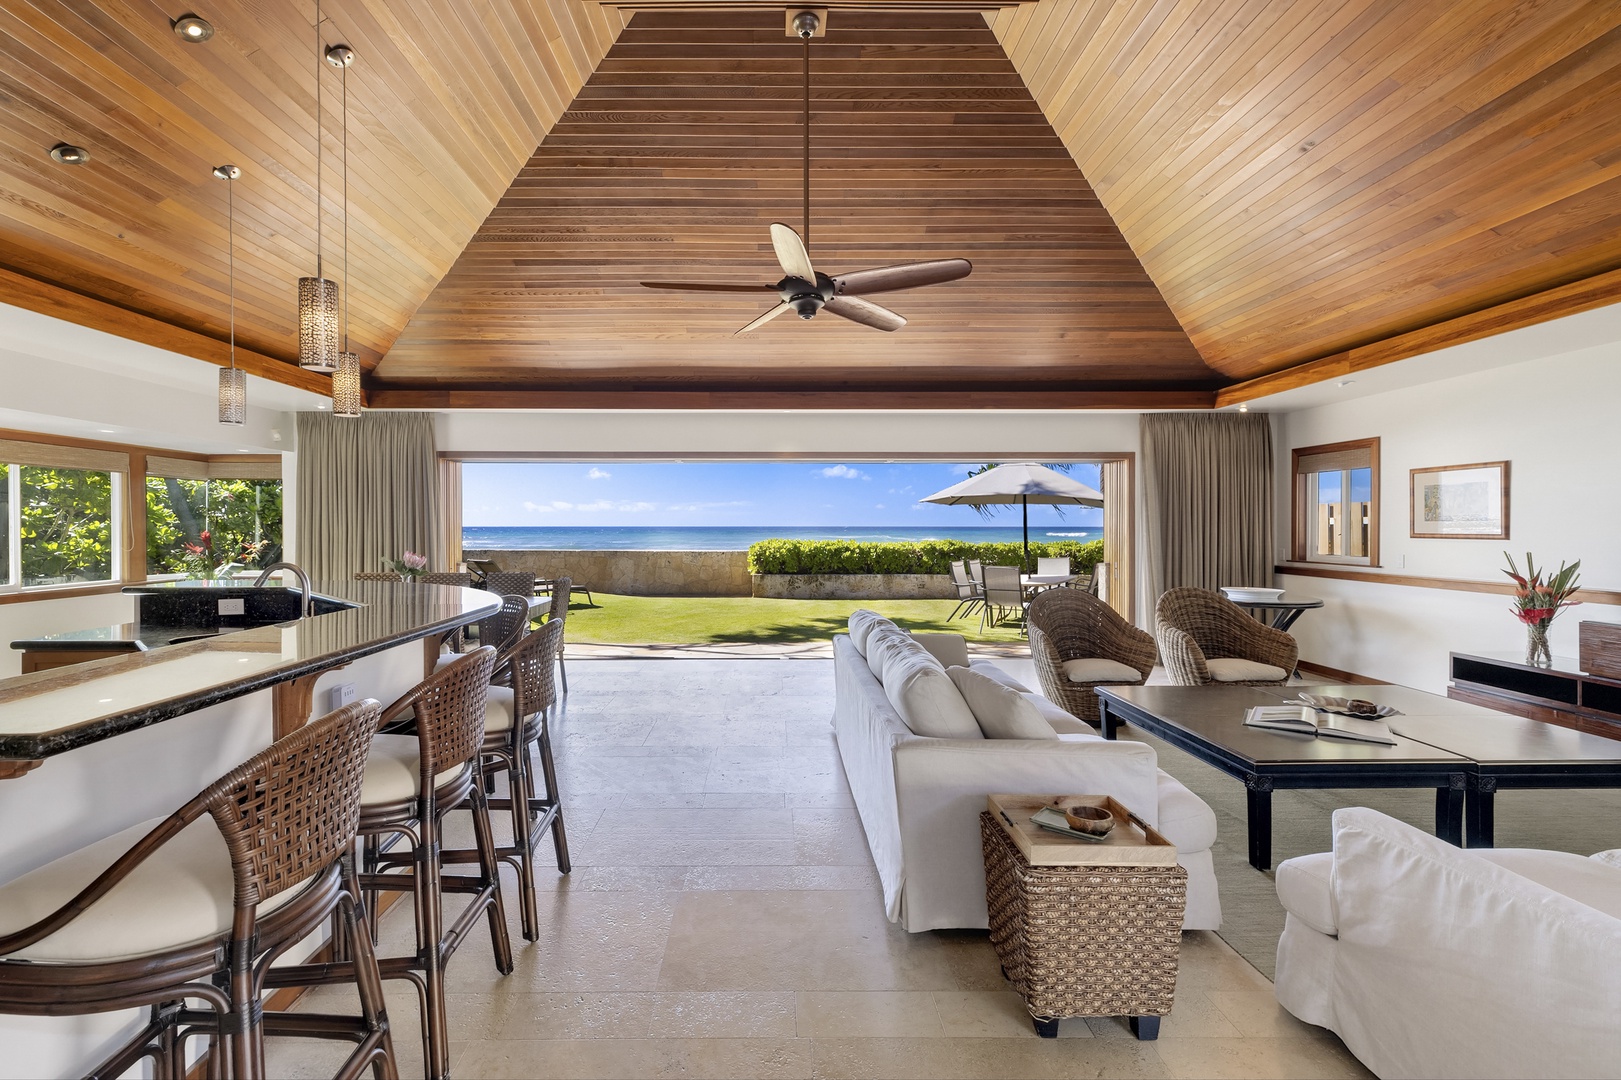 Honolulu Vacation Rentals, Hale Makai at Diamond Head - Living Room opens up to the Oceanside Yard